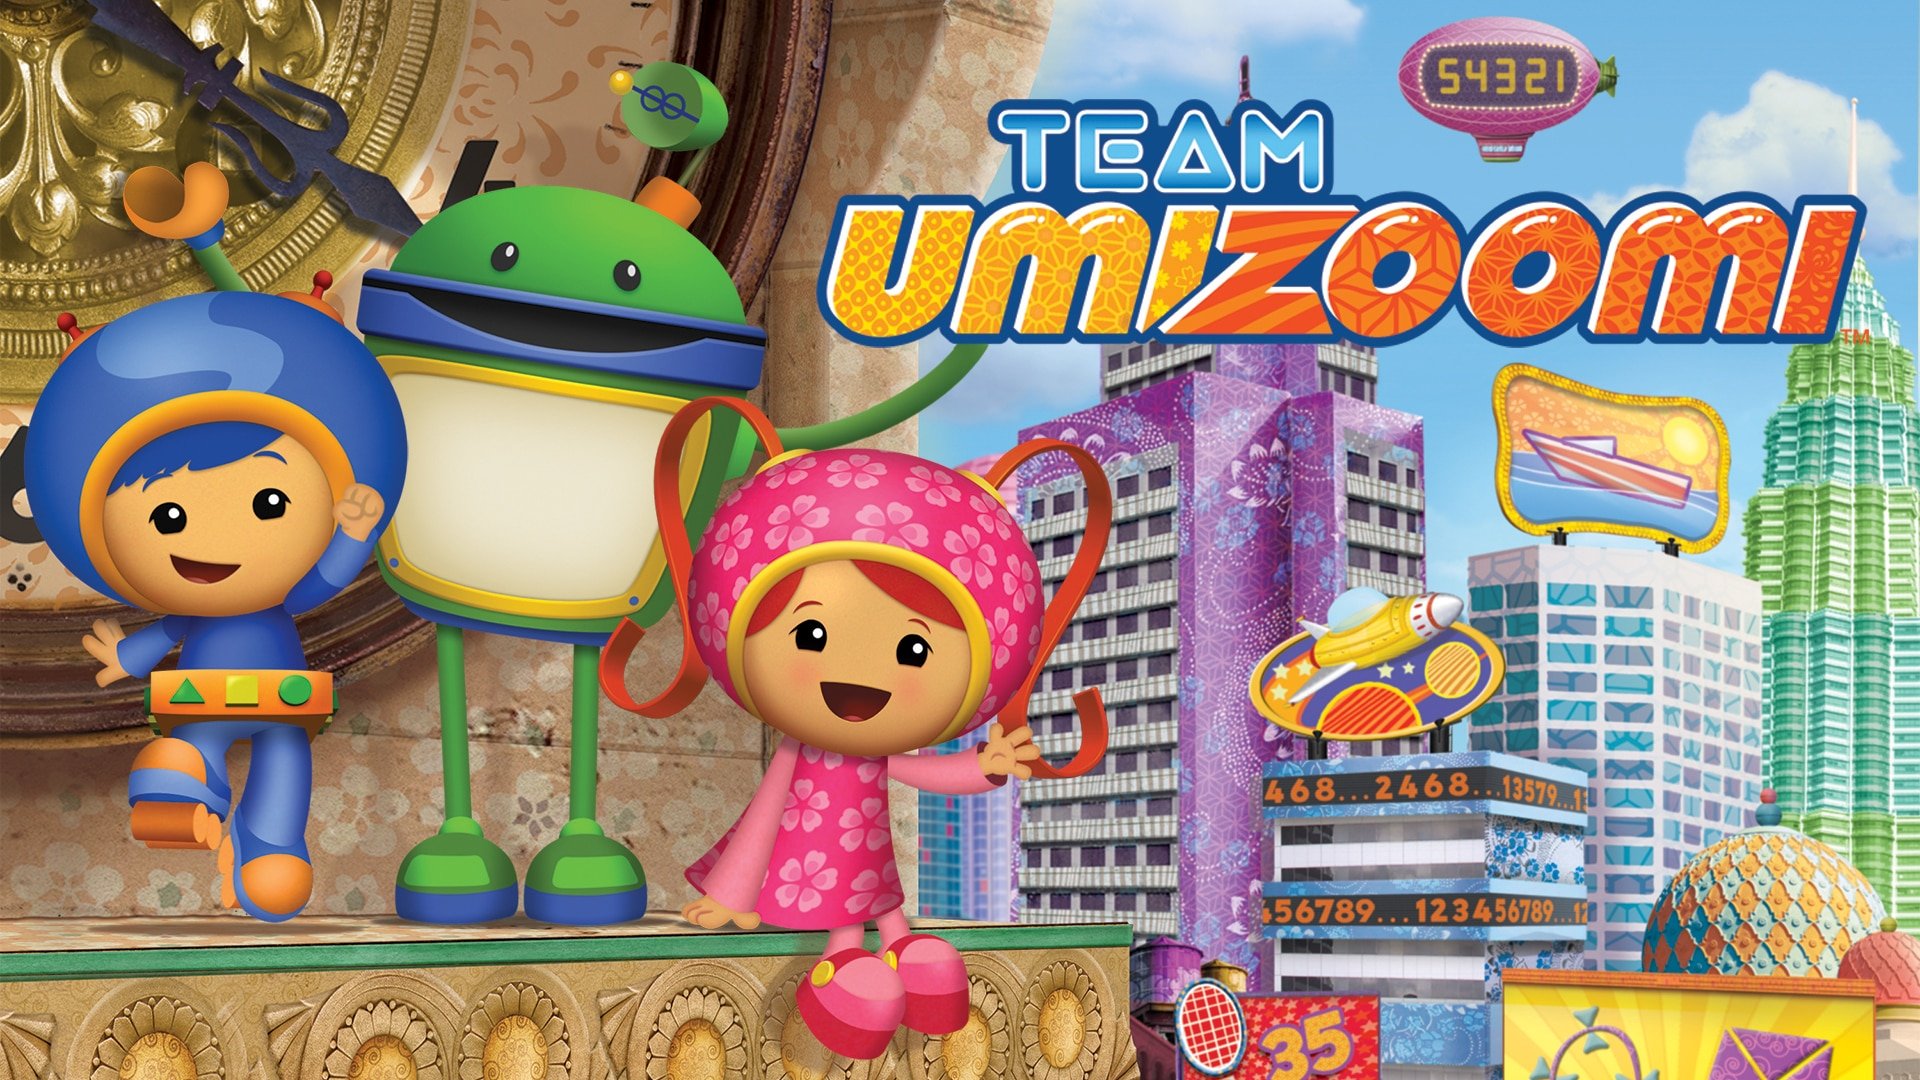 Watch Team Umizoomi Season 1 Episode 17 Online - Stream Full Episodes